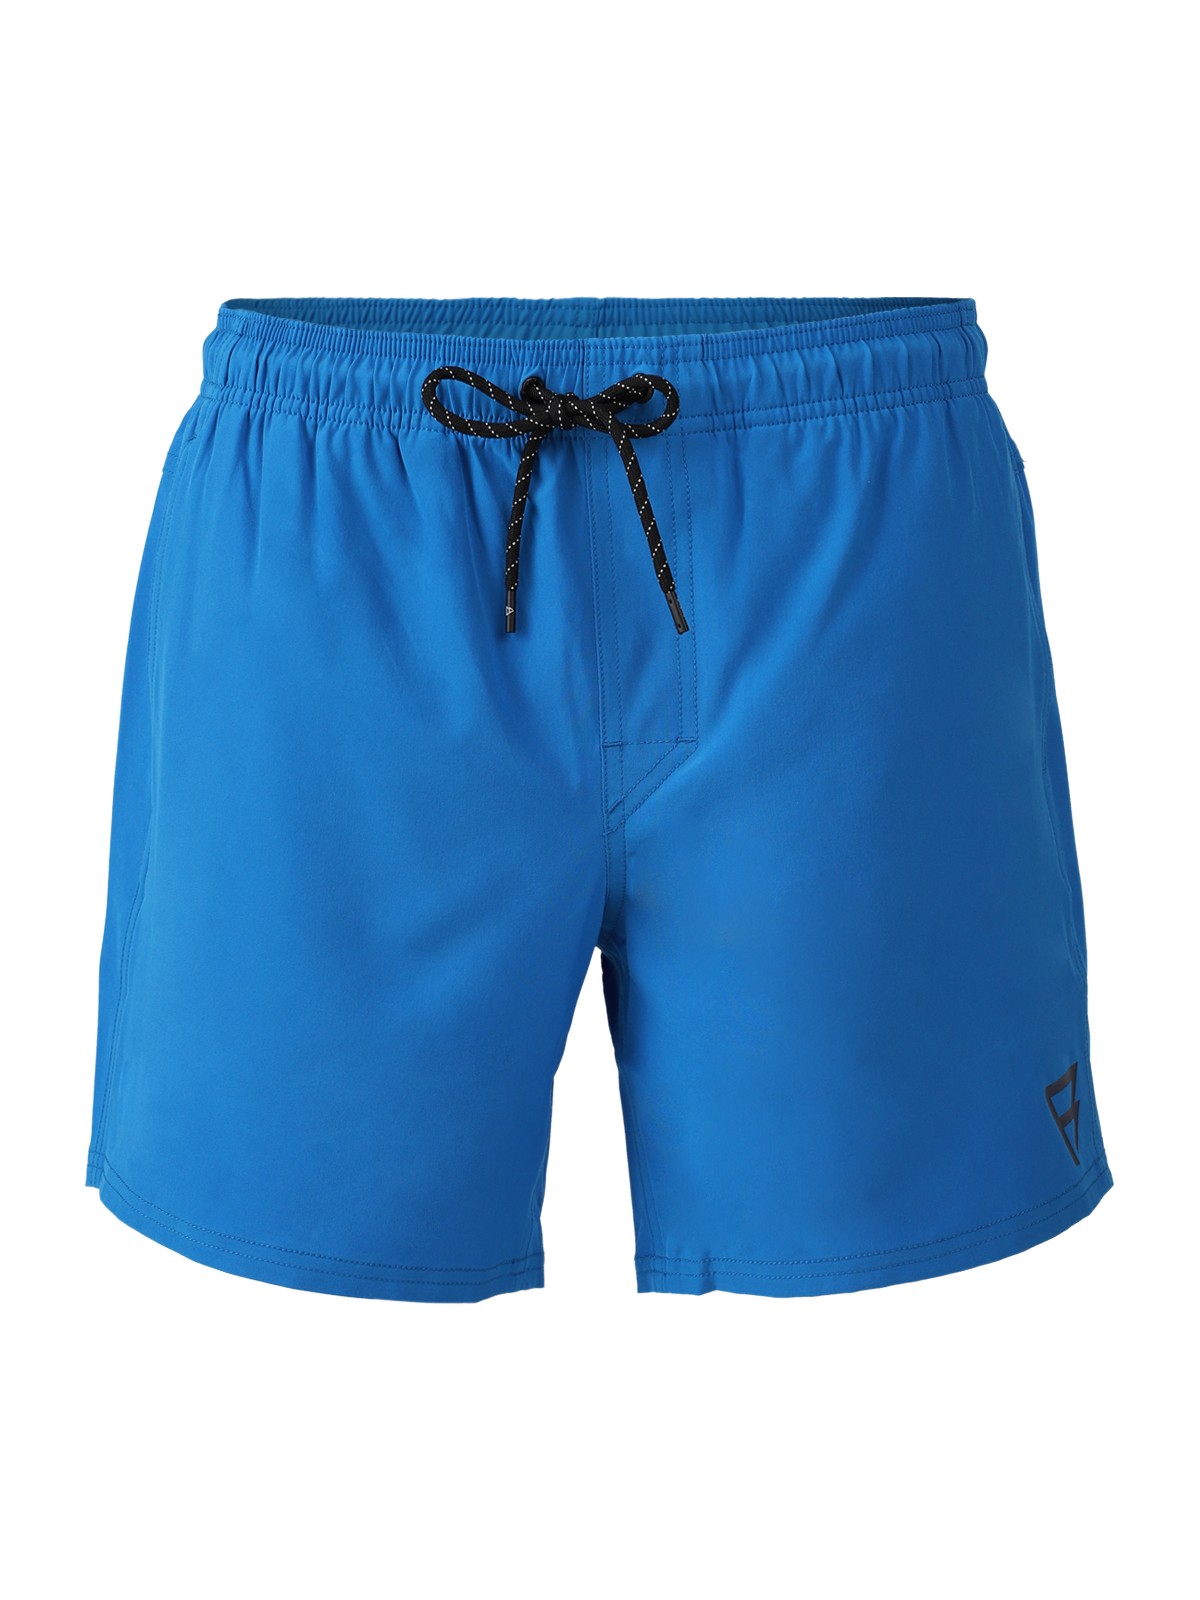 Bru-conic Men Swim Shorts | Neon Blue